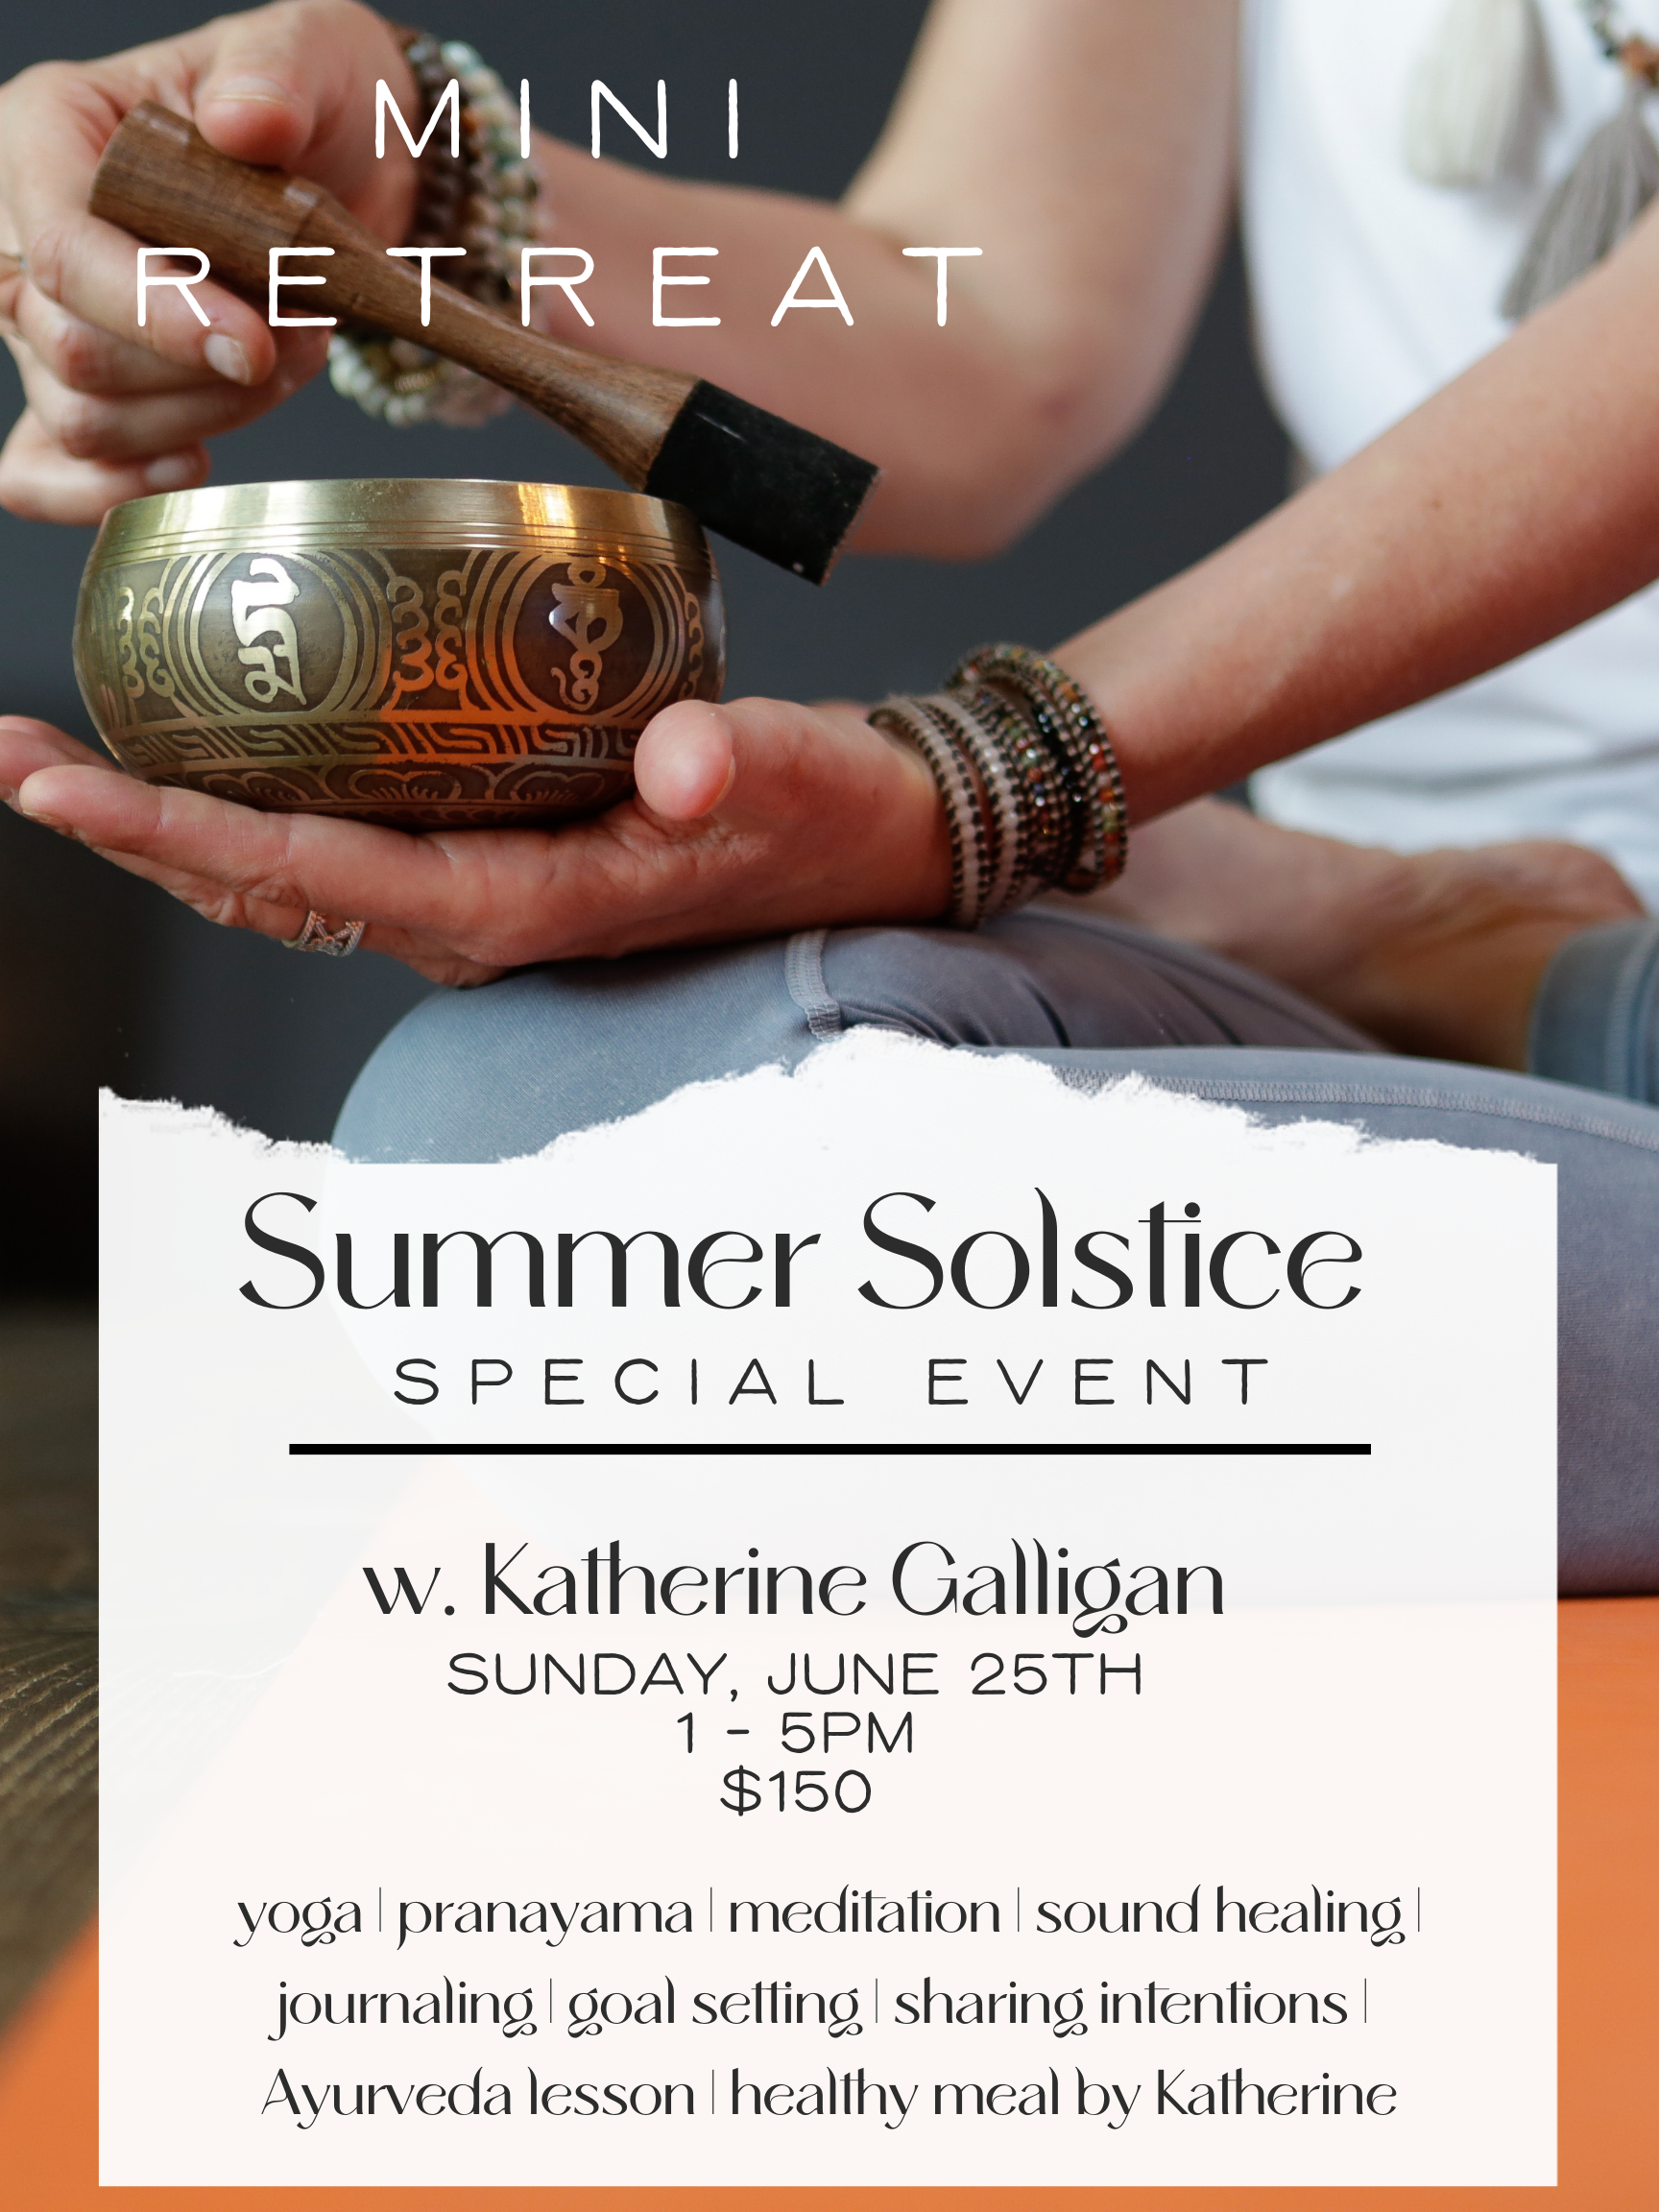 Summer Solstice with Katherine Galligan